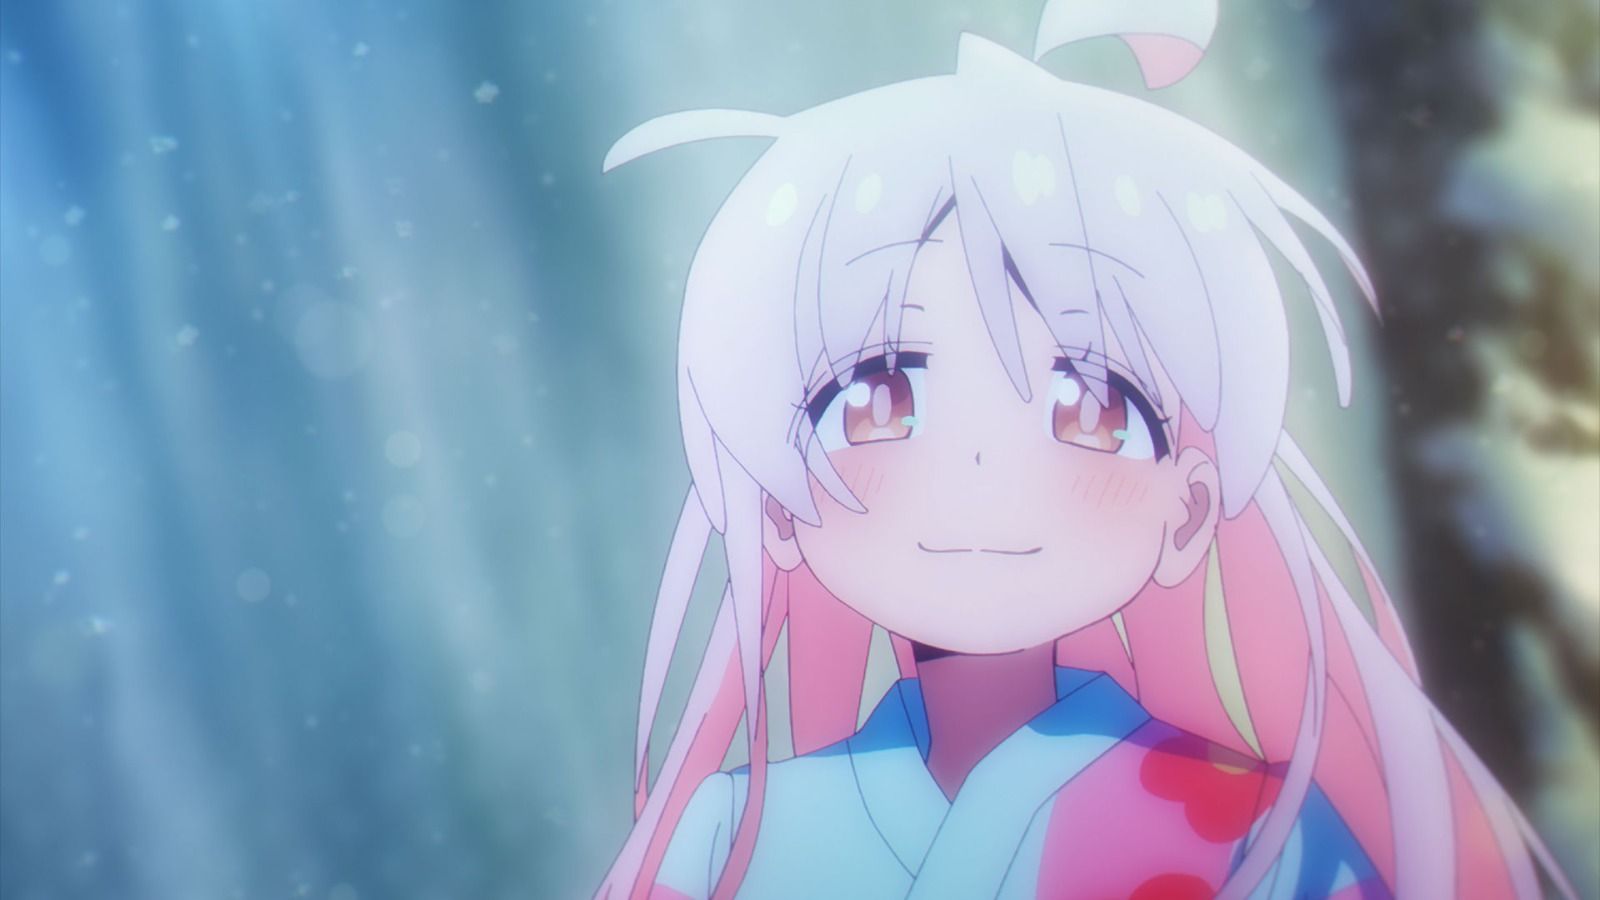 deskripsi: Nonton Anime Onimai: I’m Now Your Sister Episode 12 Sub Indo, Download Streaming Bukan di Otakudesu dan Anoboy.